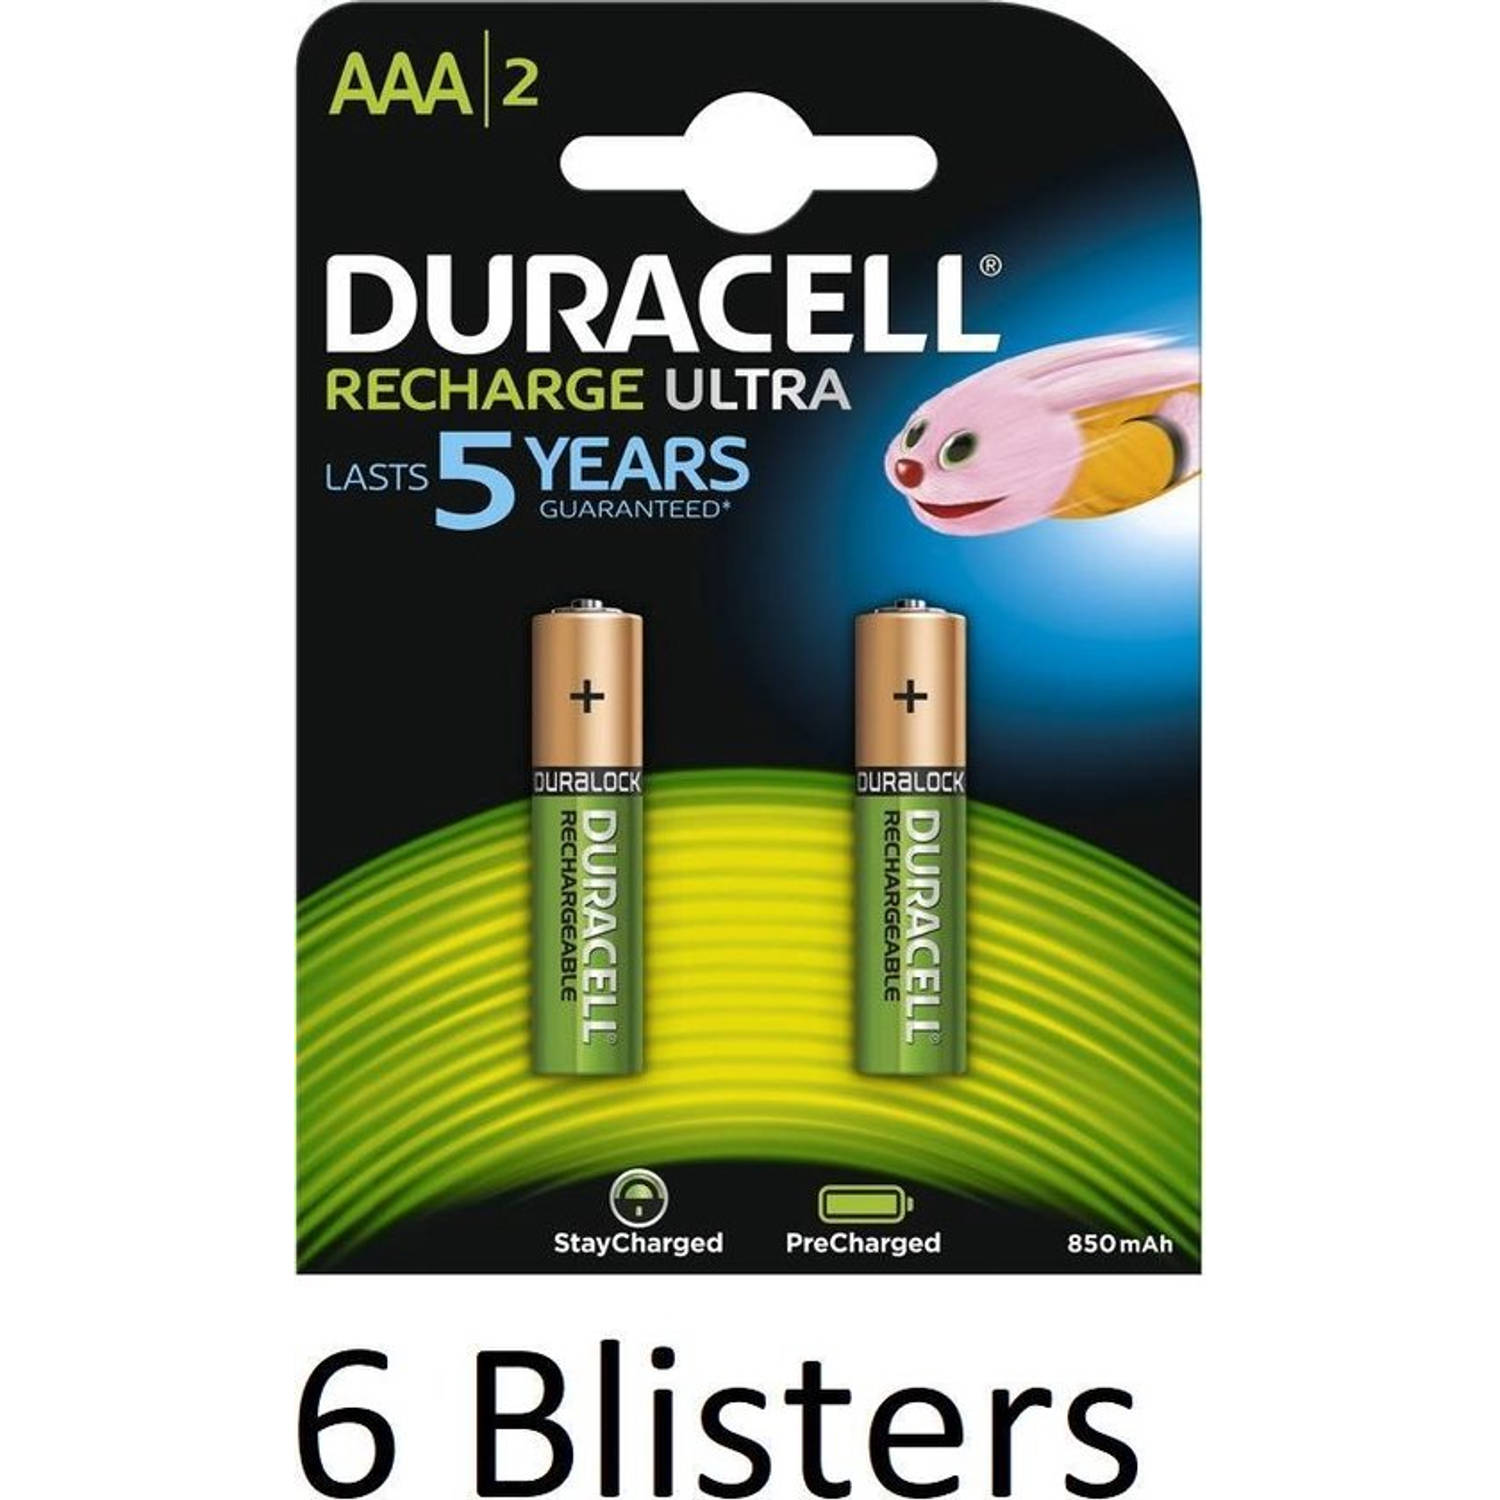 12 Stuks (6 Blisters A 2 St) Duracell Aaa Oplaadbare Batterijen 850 Mah